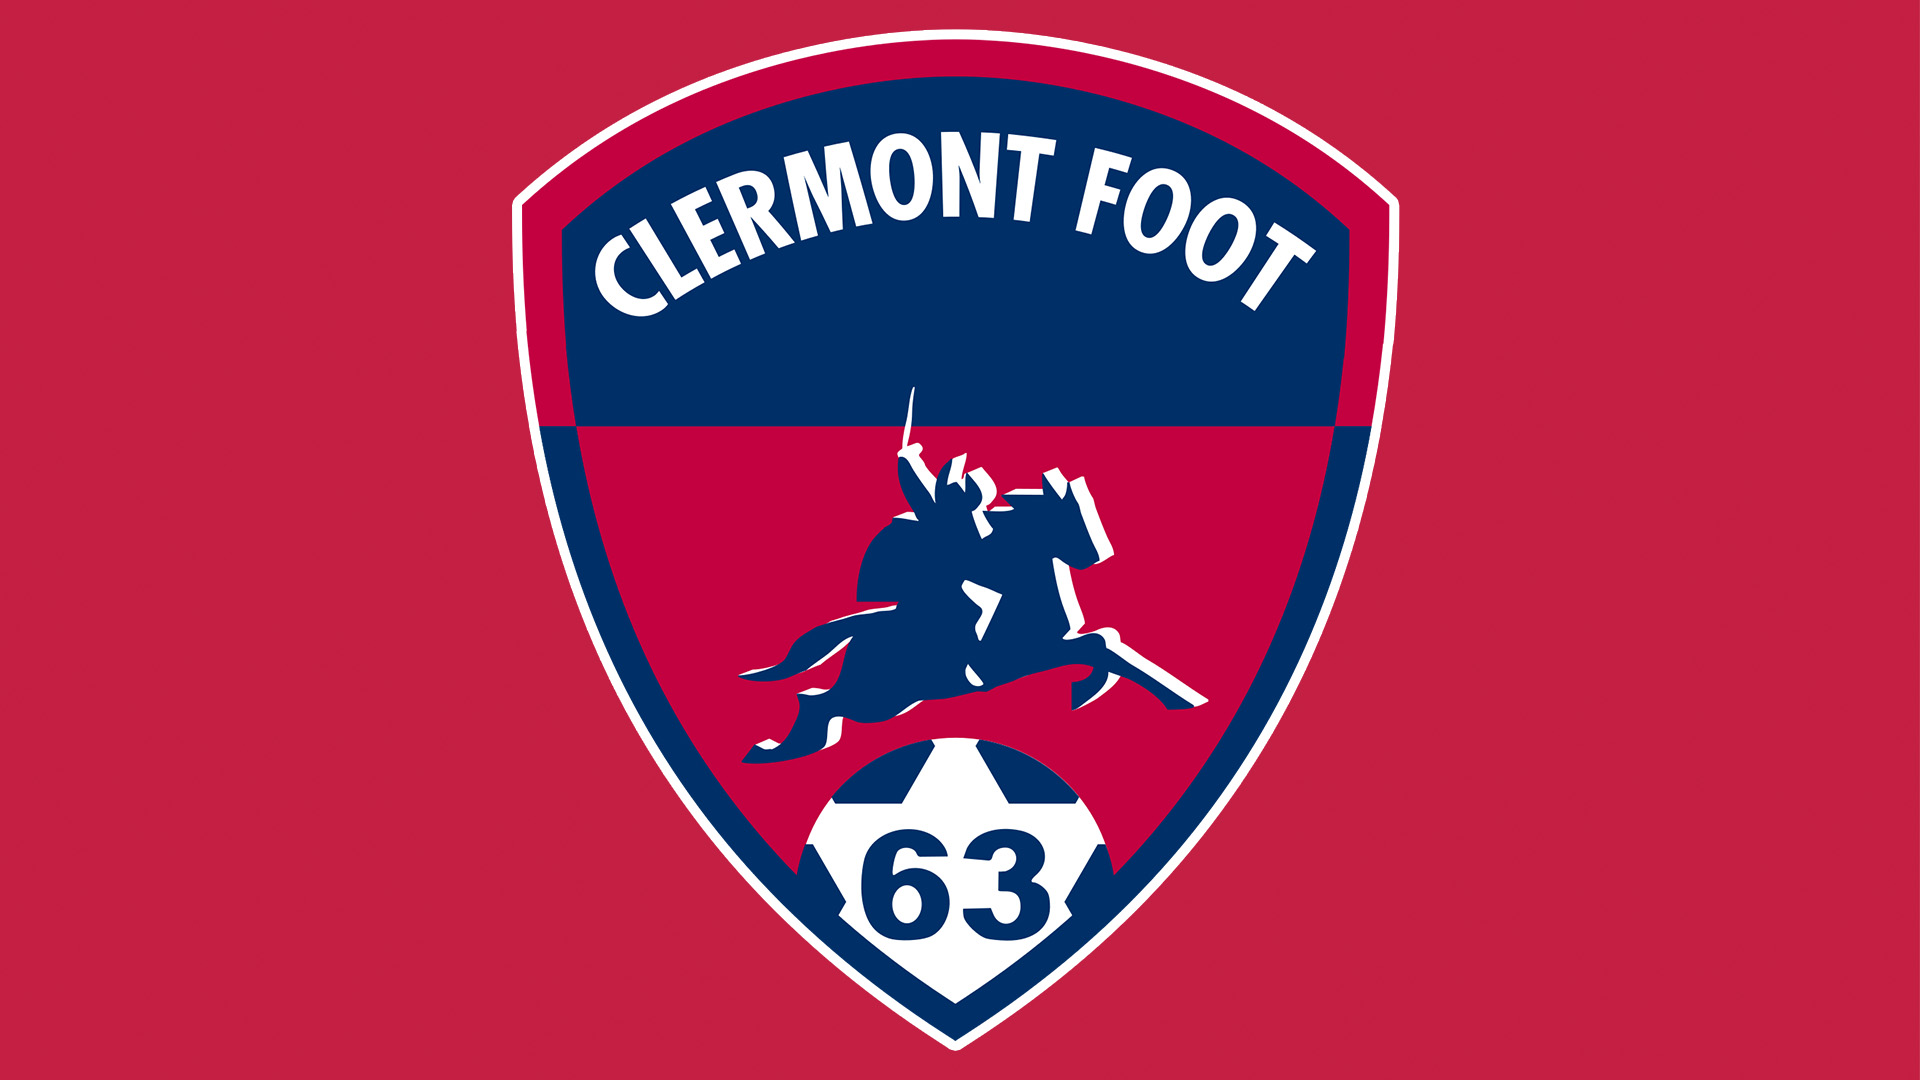 Clermont Foot 63 vs FC Martigues